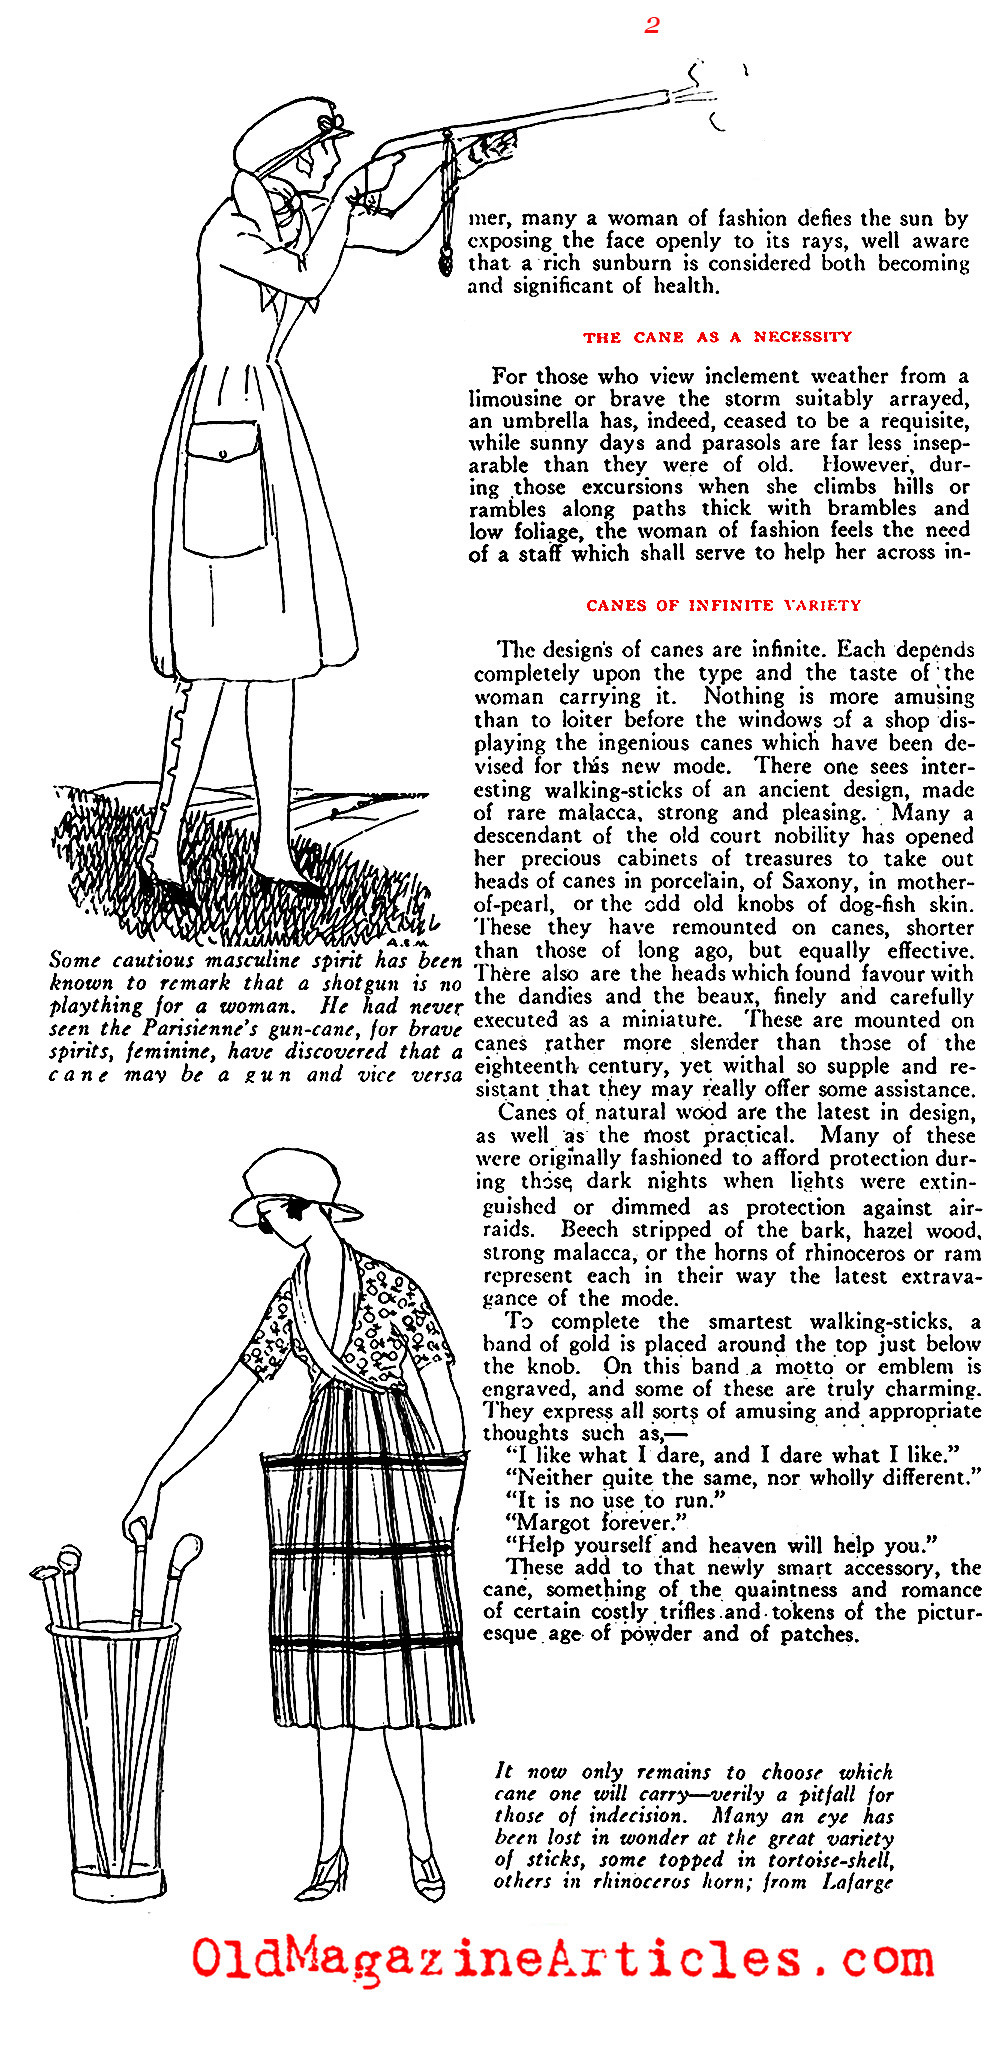 Paris Puts a Stick in the Mode...(Vogue Magazine, 1919)